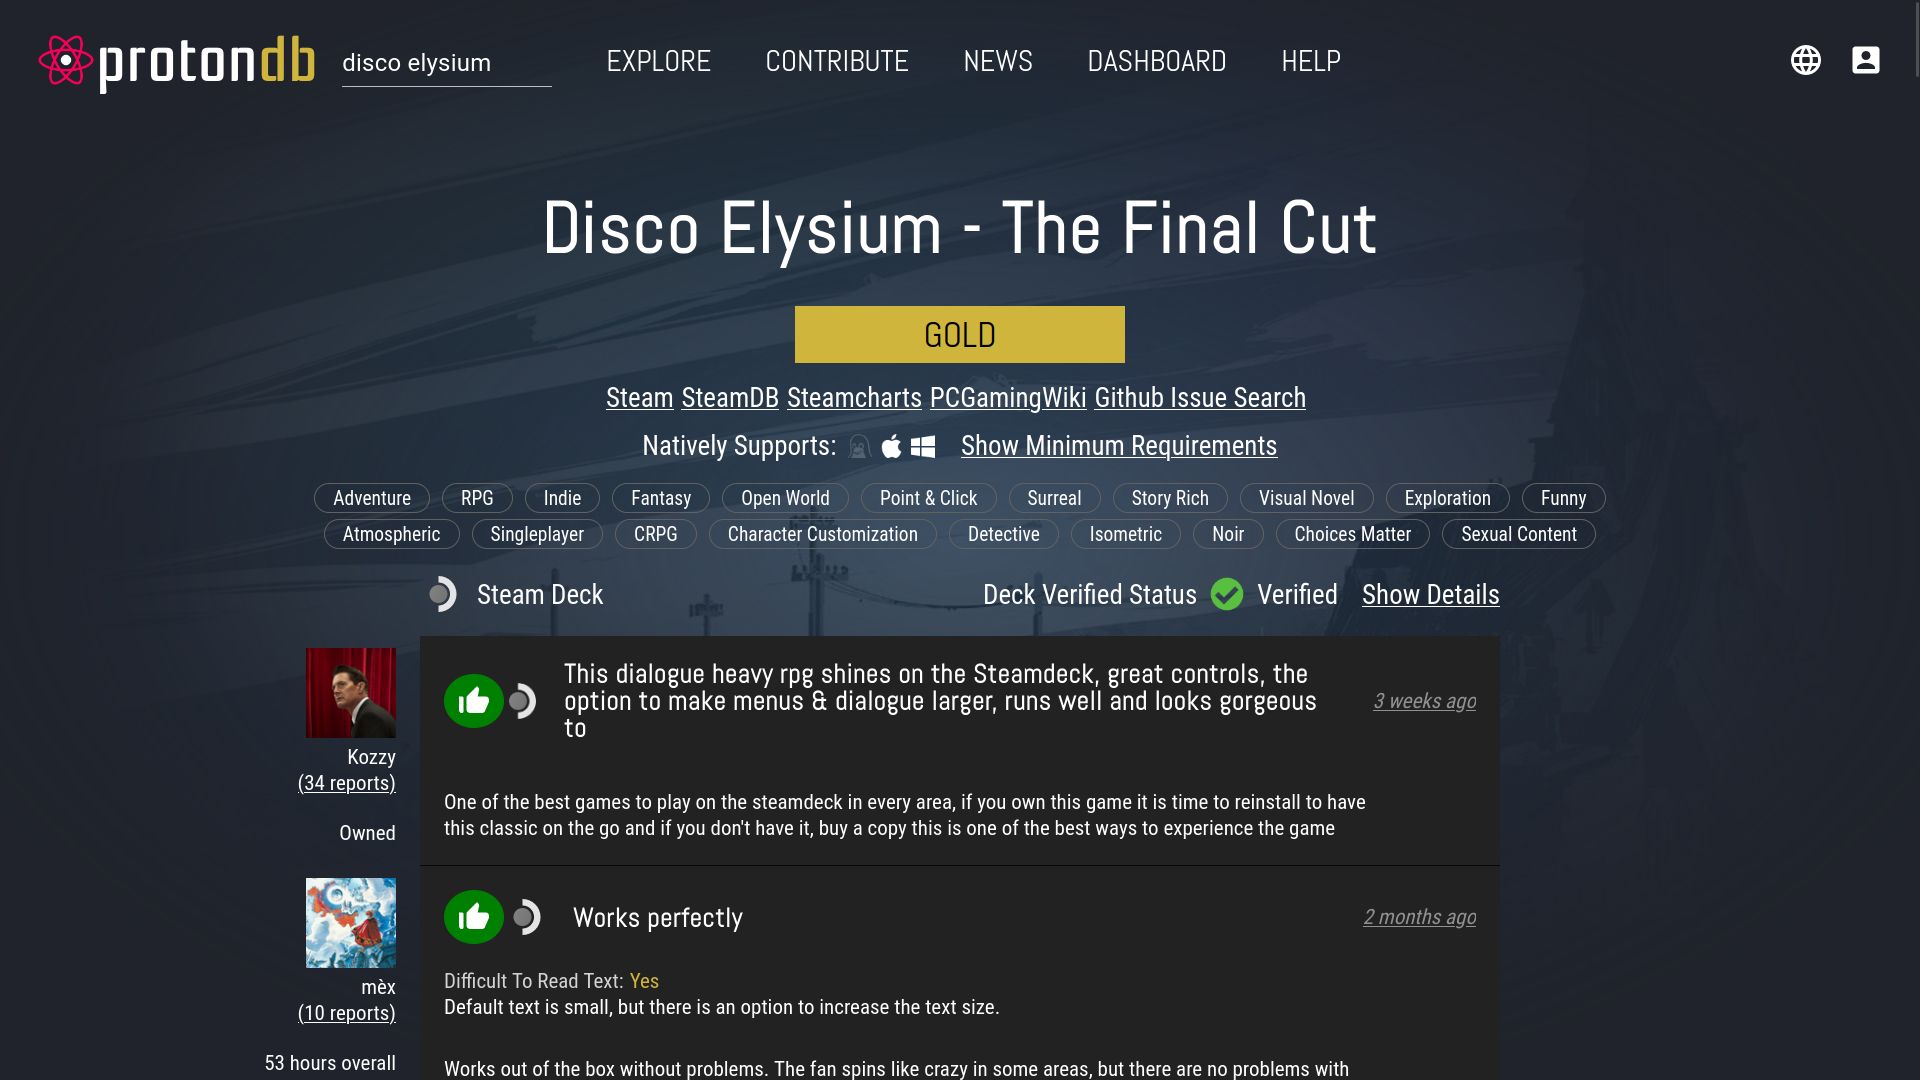 Disco Elysium page of the ProtonDB site